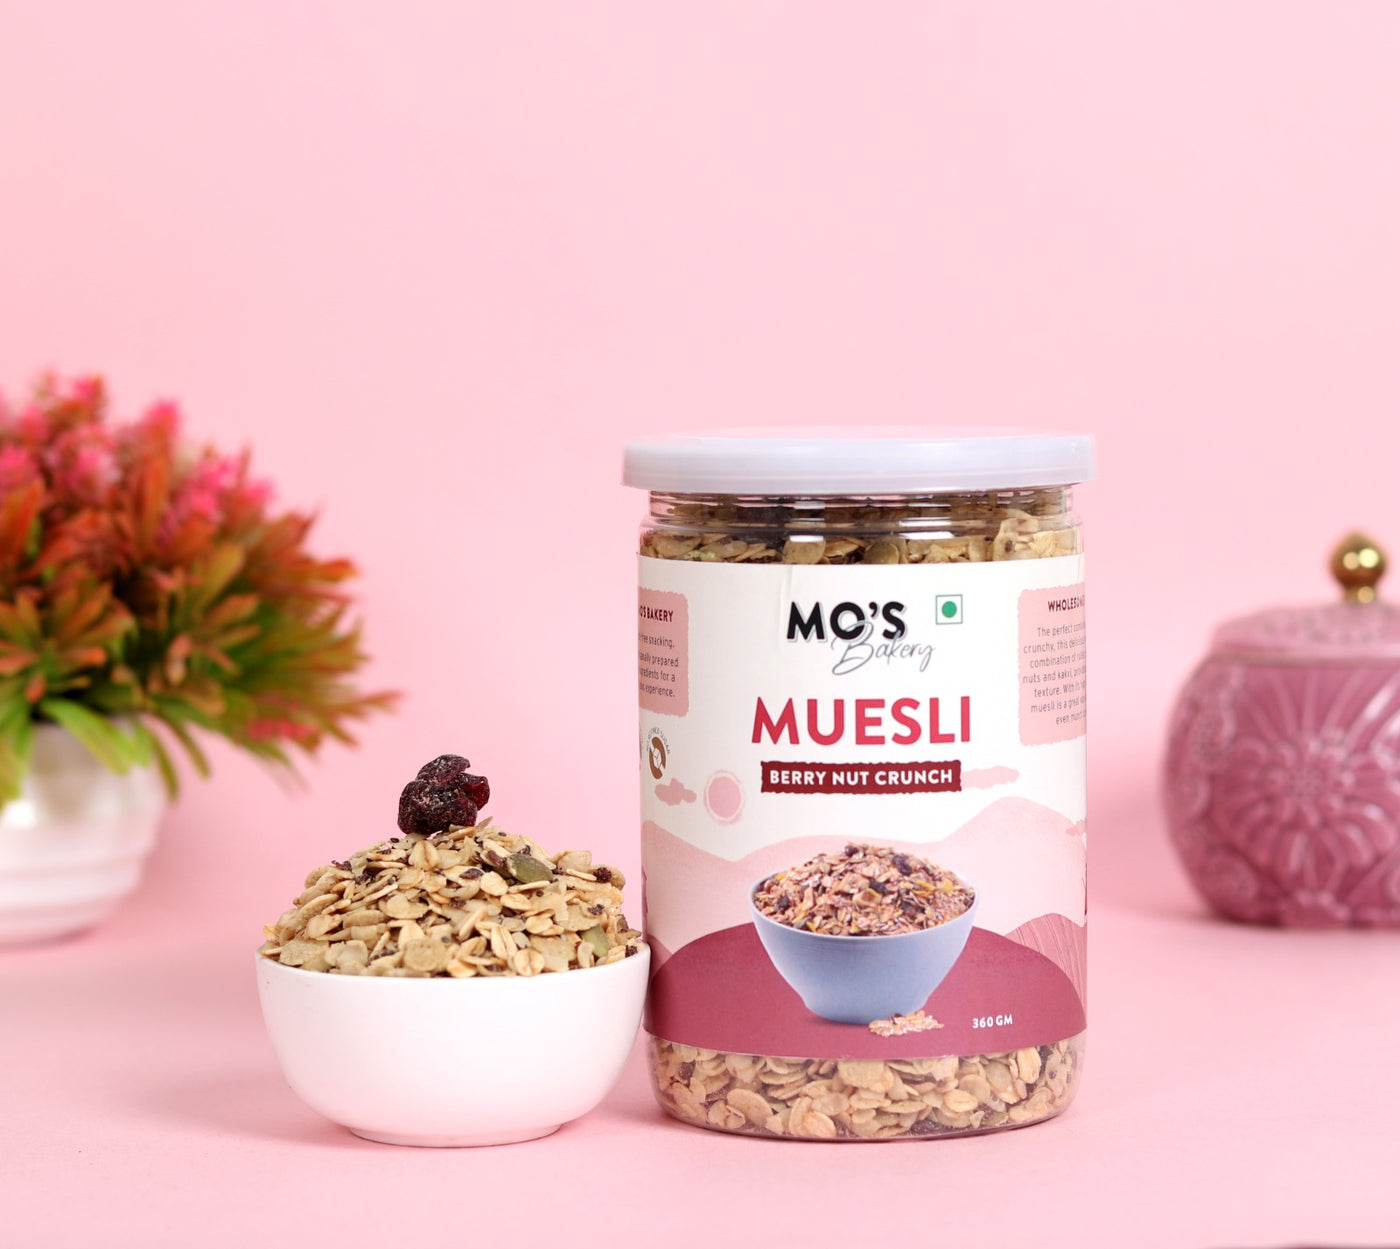 Mo's Millet Muesli Berry Nut Crunch 90% whole grain & protein rich